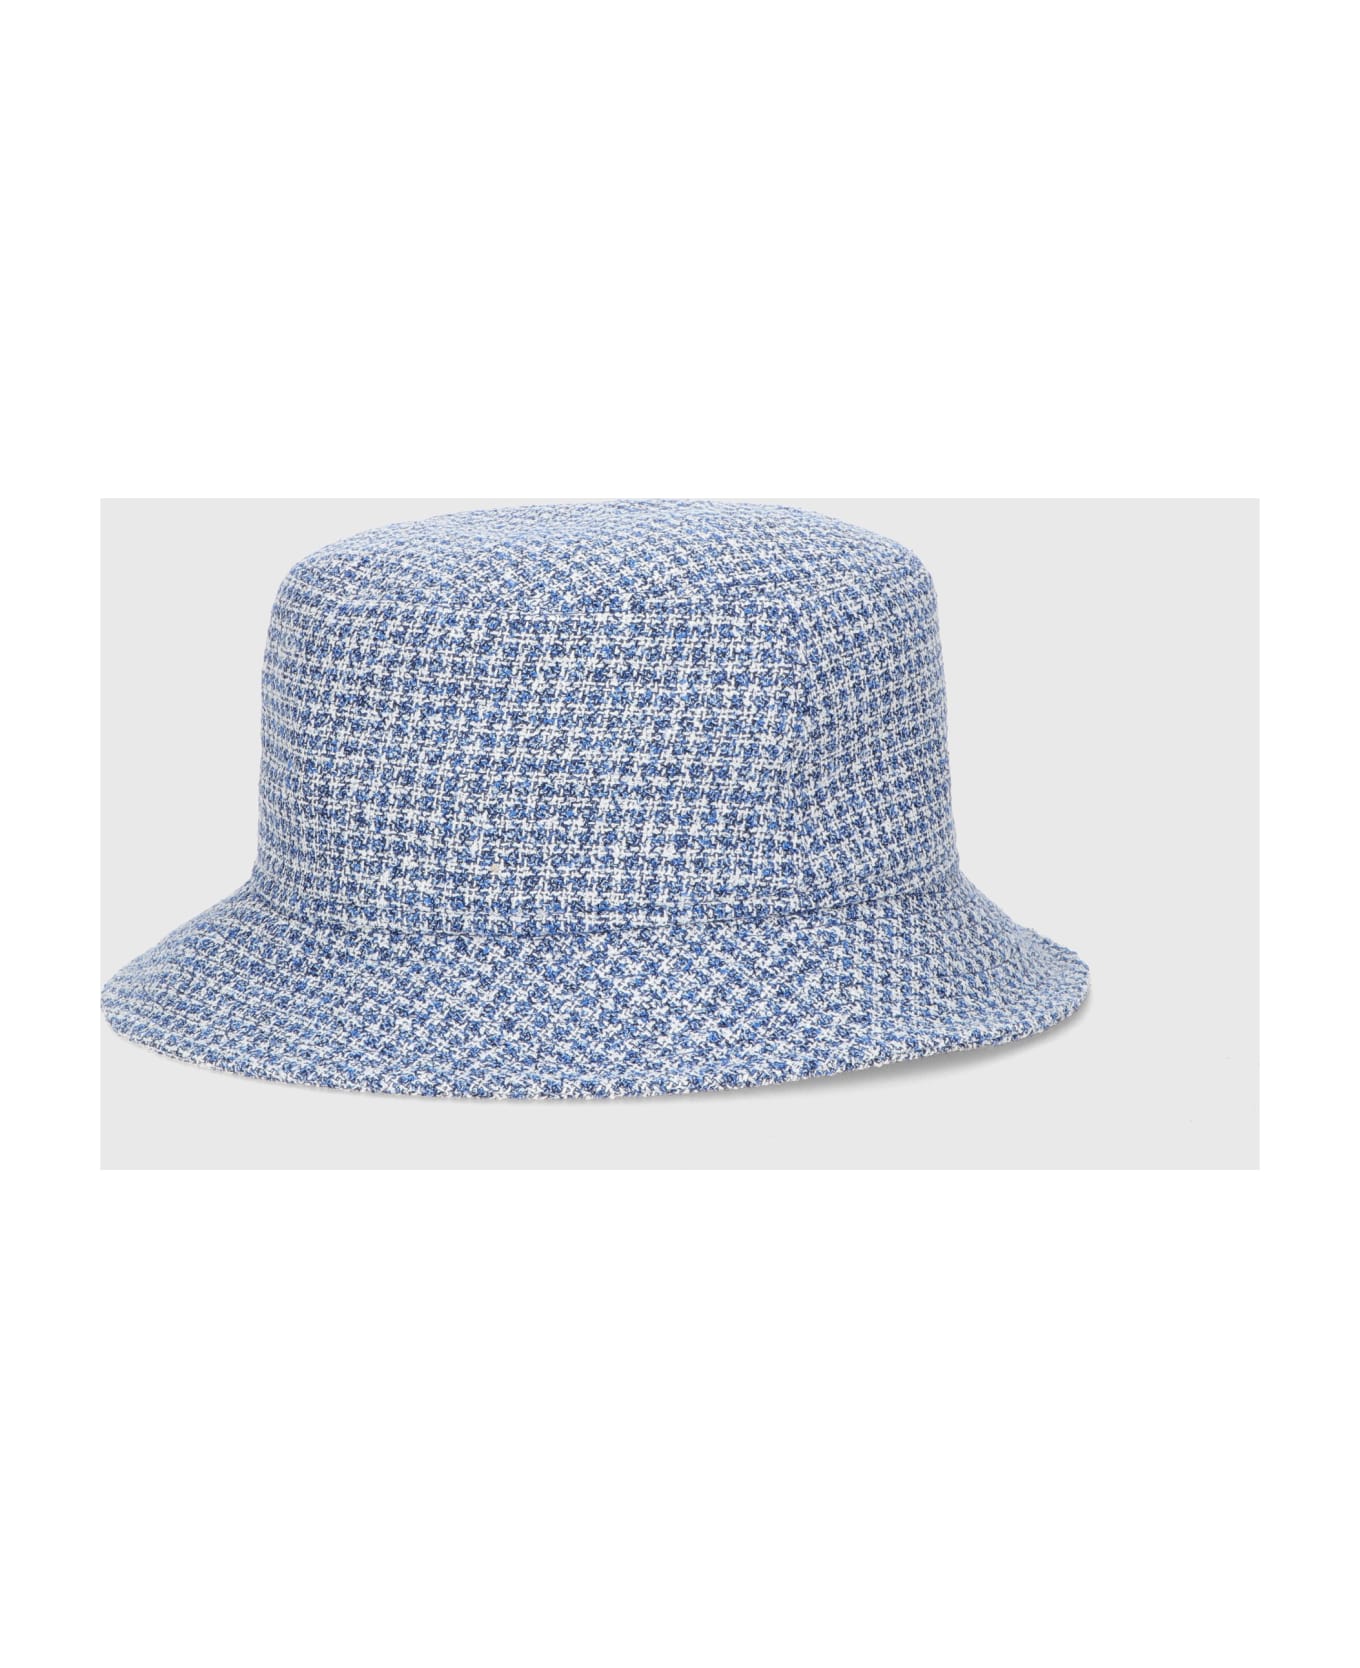 Borsalino Mistero Bucket - HOUNDSTOOTH BLUE/WHITE 帽子